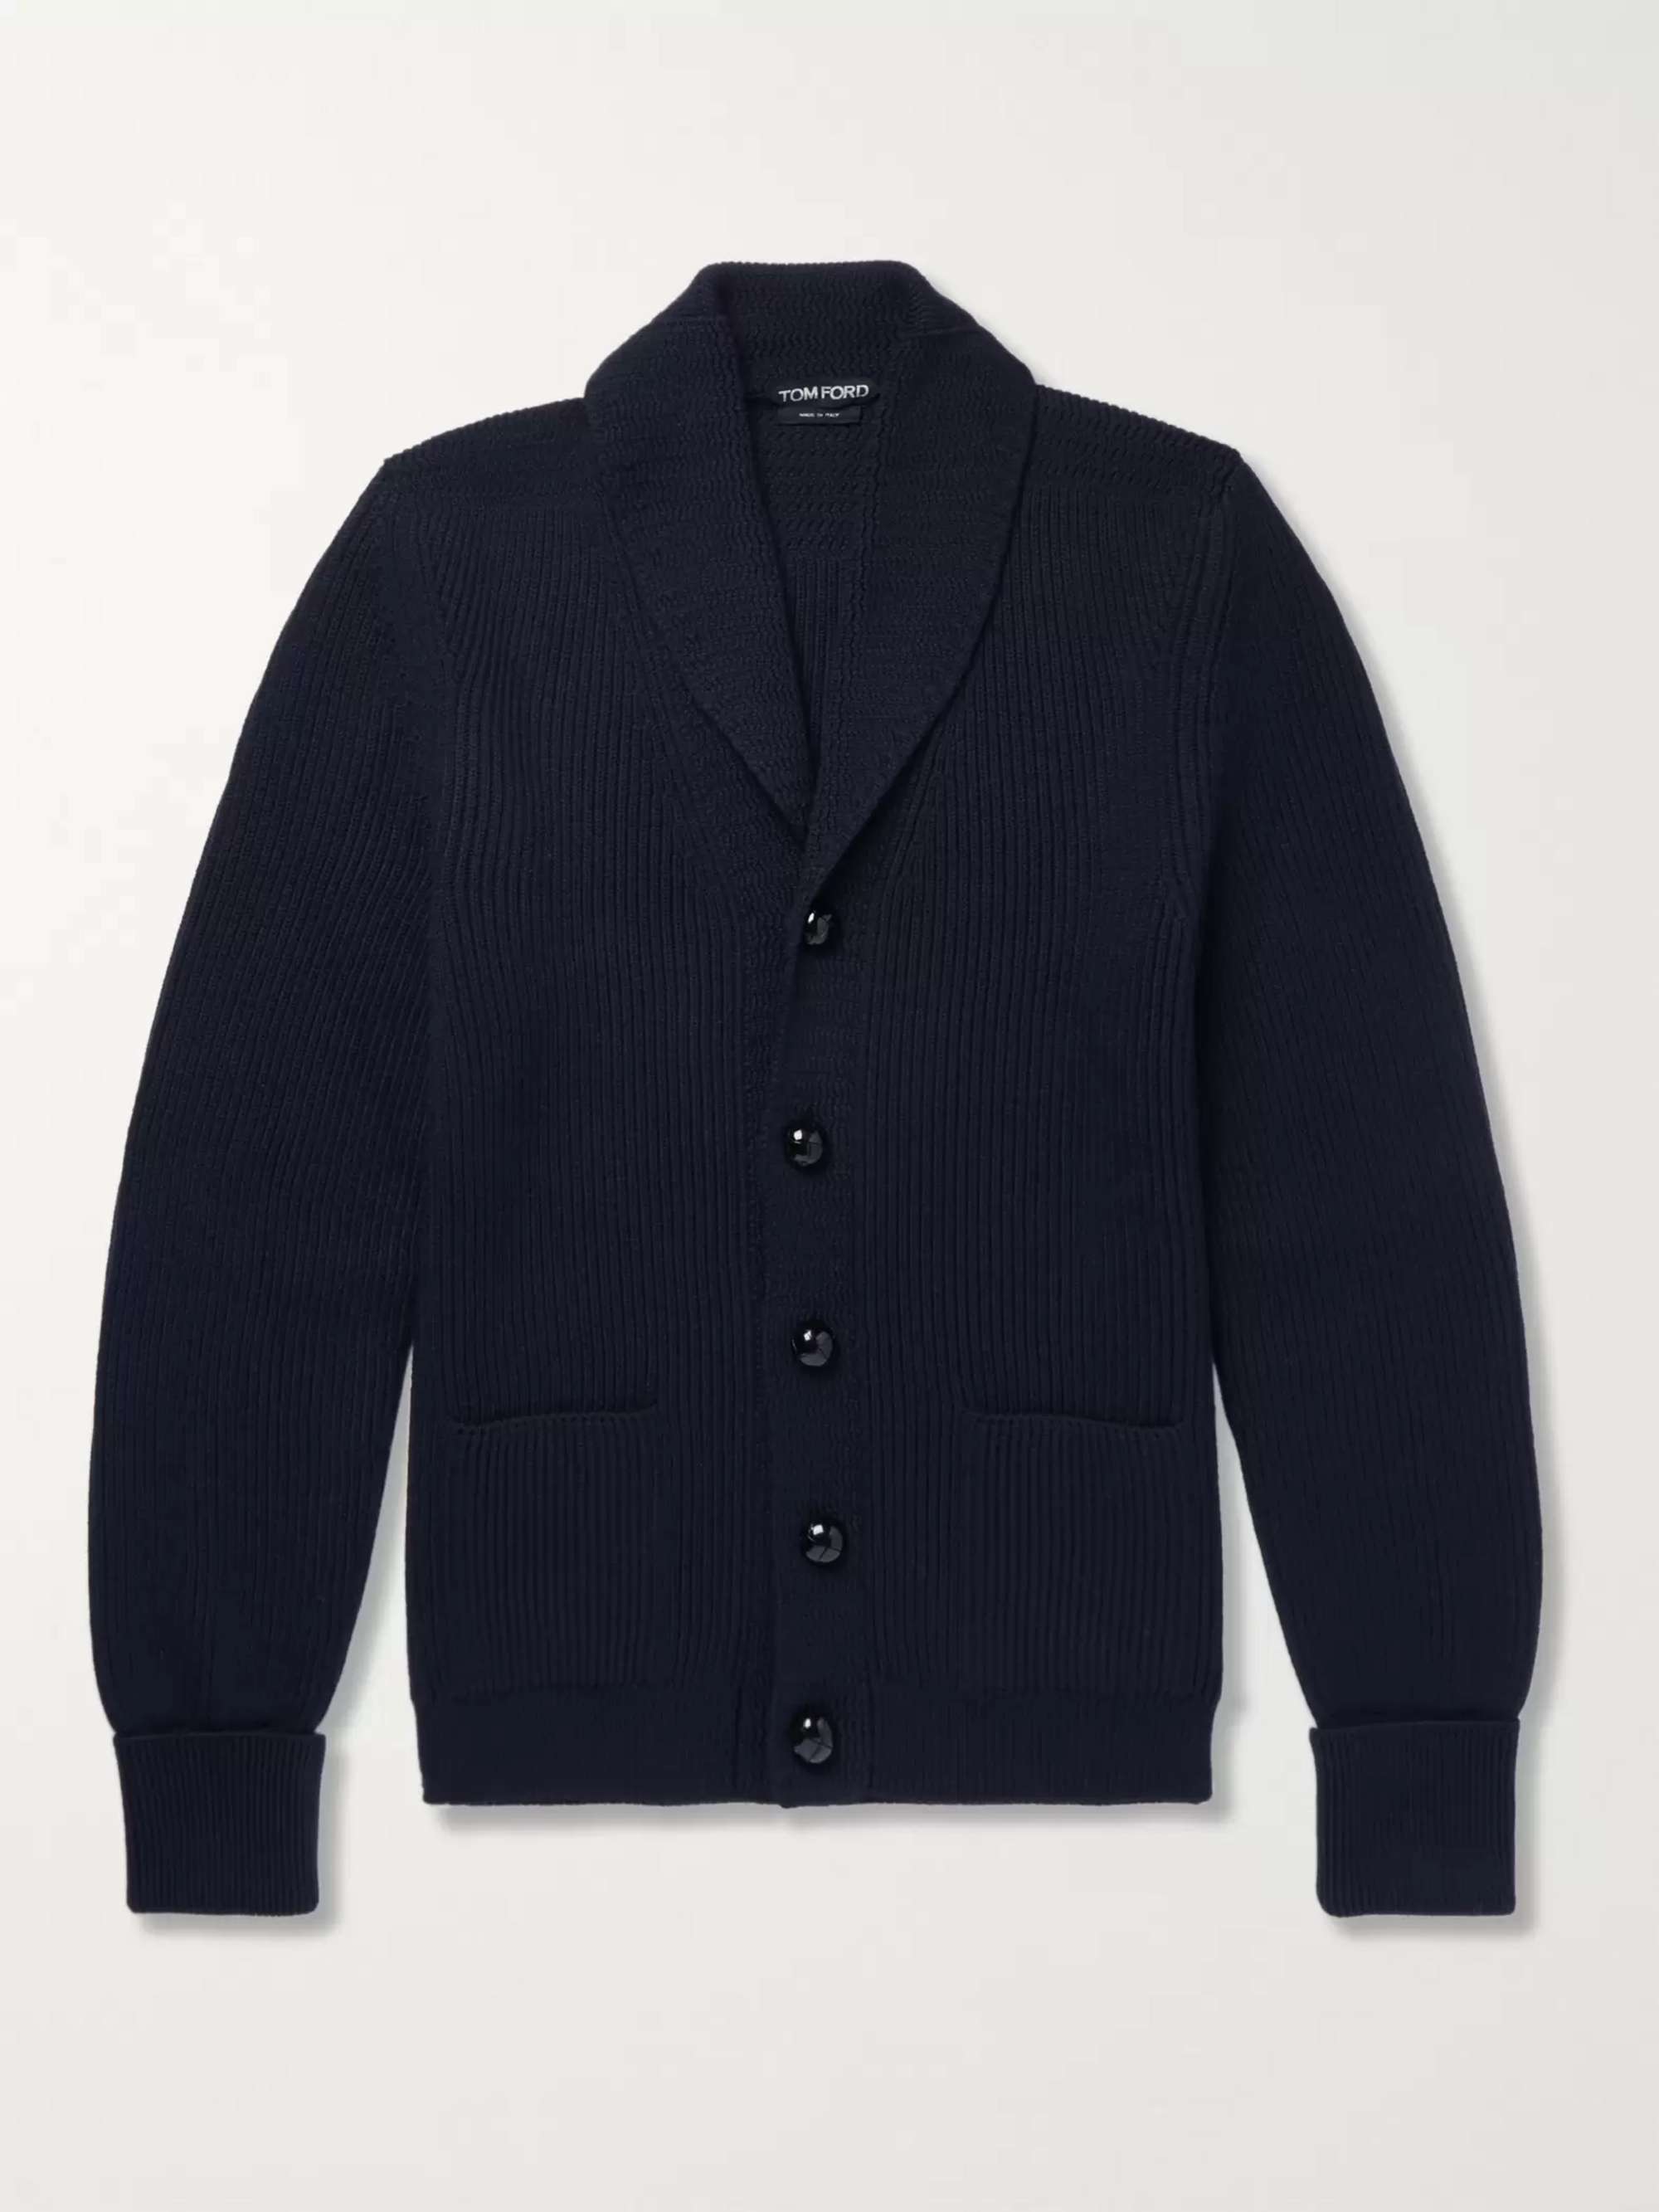 TOM FORD Shawl-Collar Ribbed Wool Cardigan for Men | MR PORTER